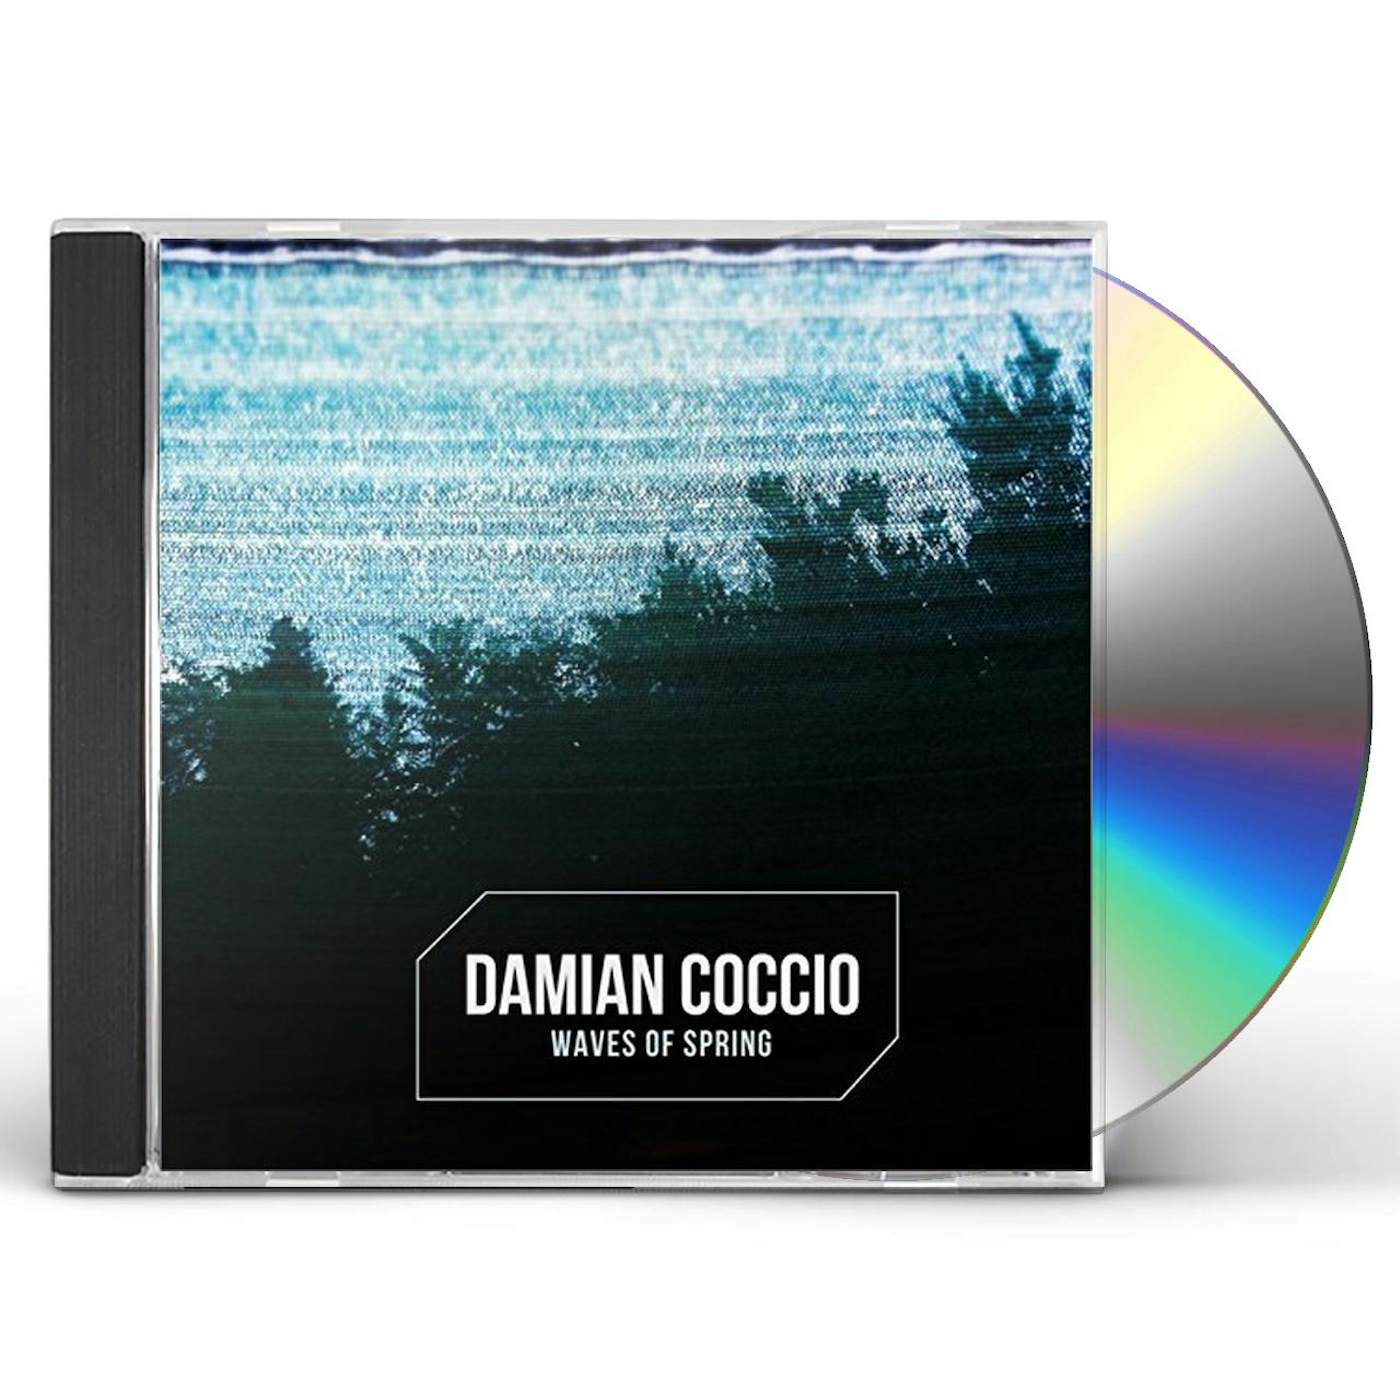 Damian Coccio WAVES OF SPRING CD